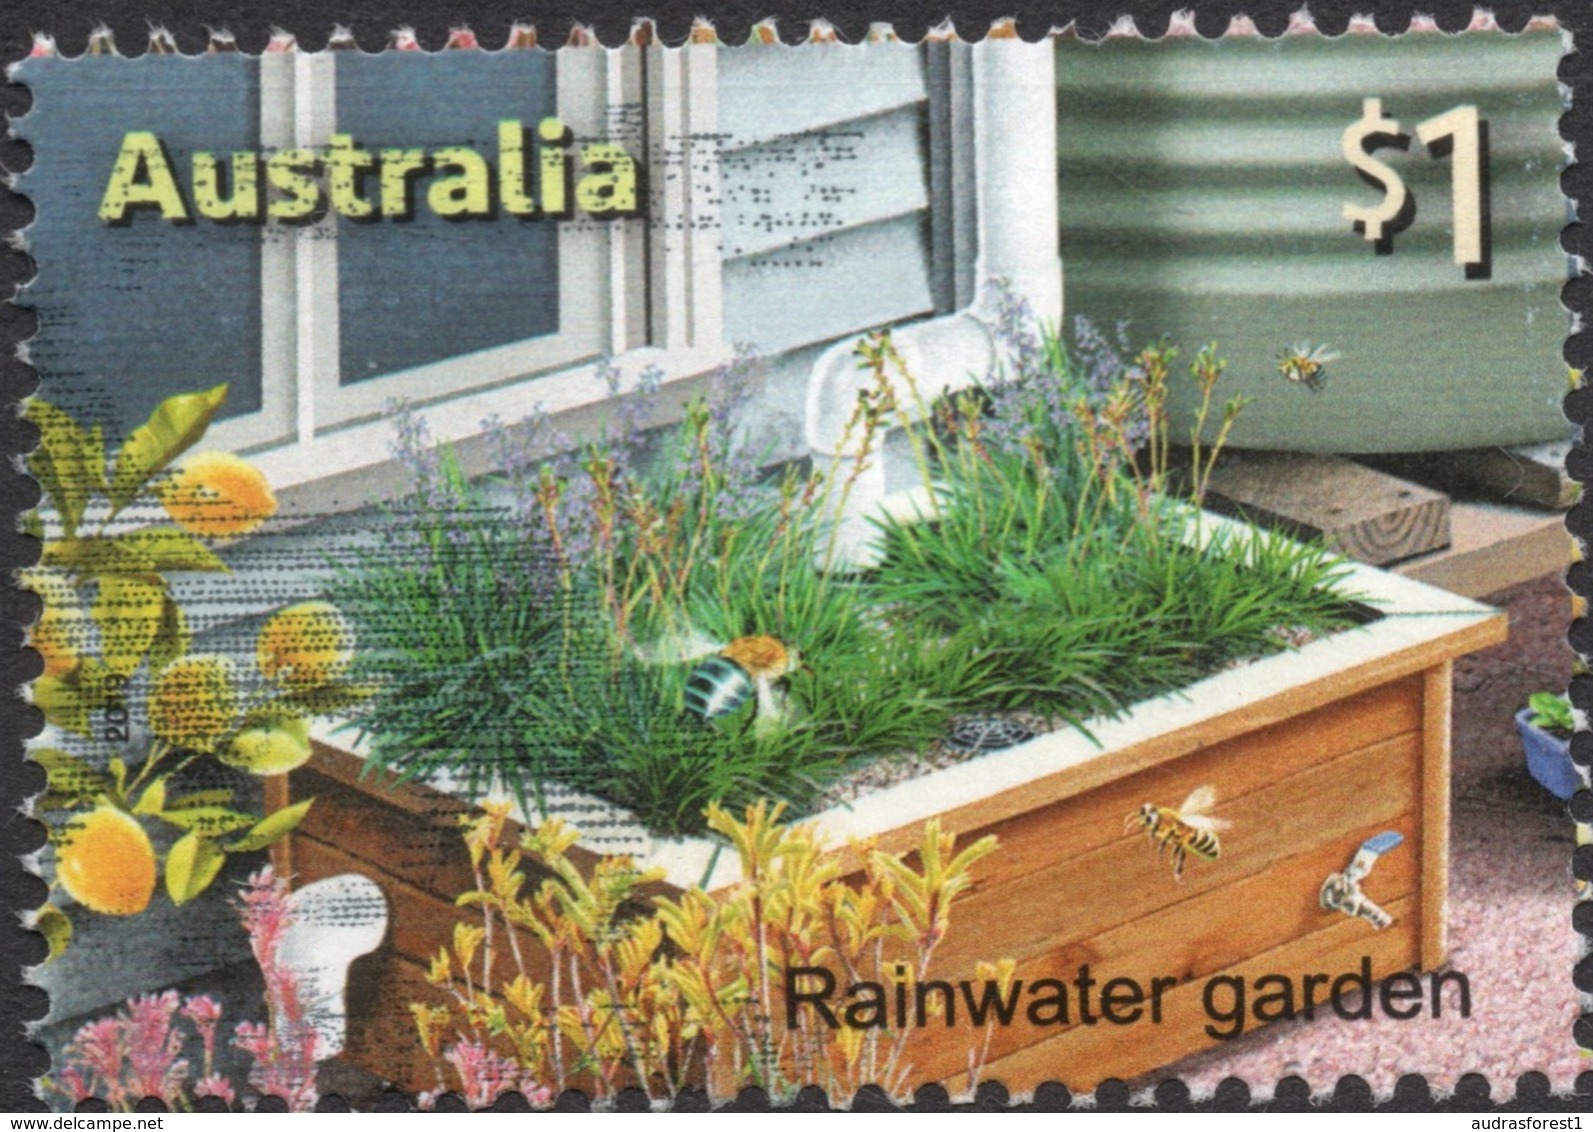 2019 Australia $1 Rainwater Garden Sheet STAMP  Very Fine Used - Oblitérés